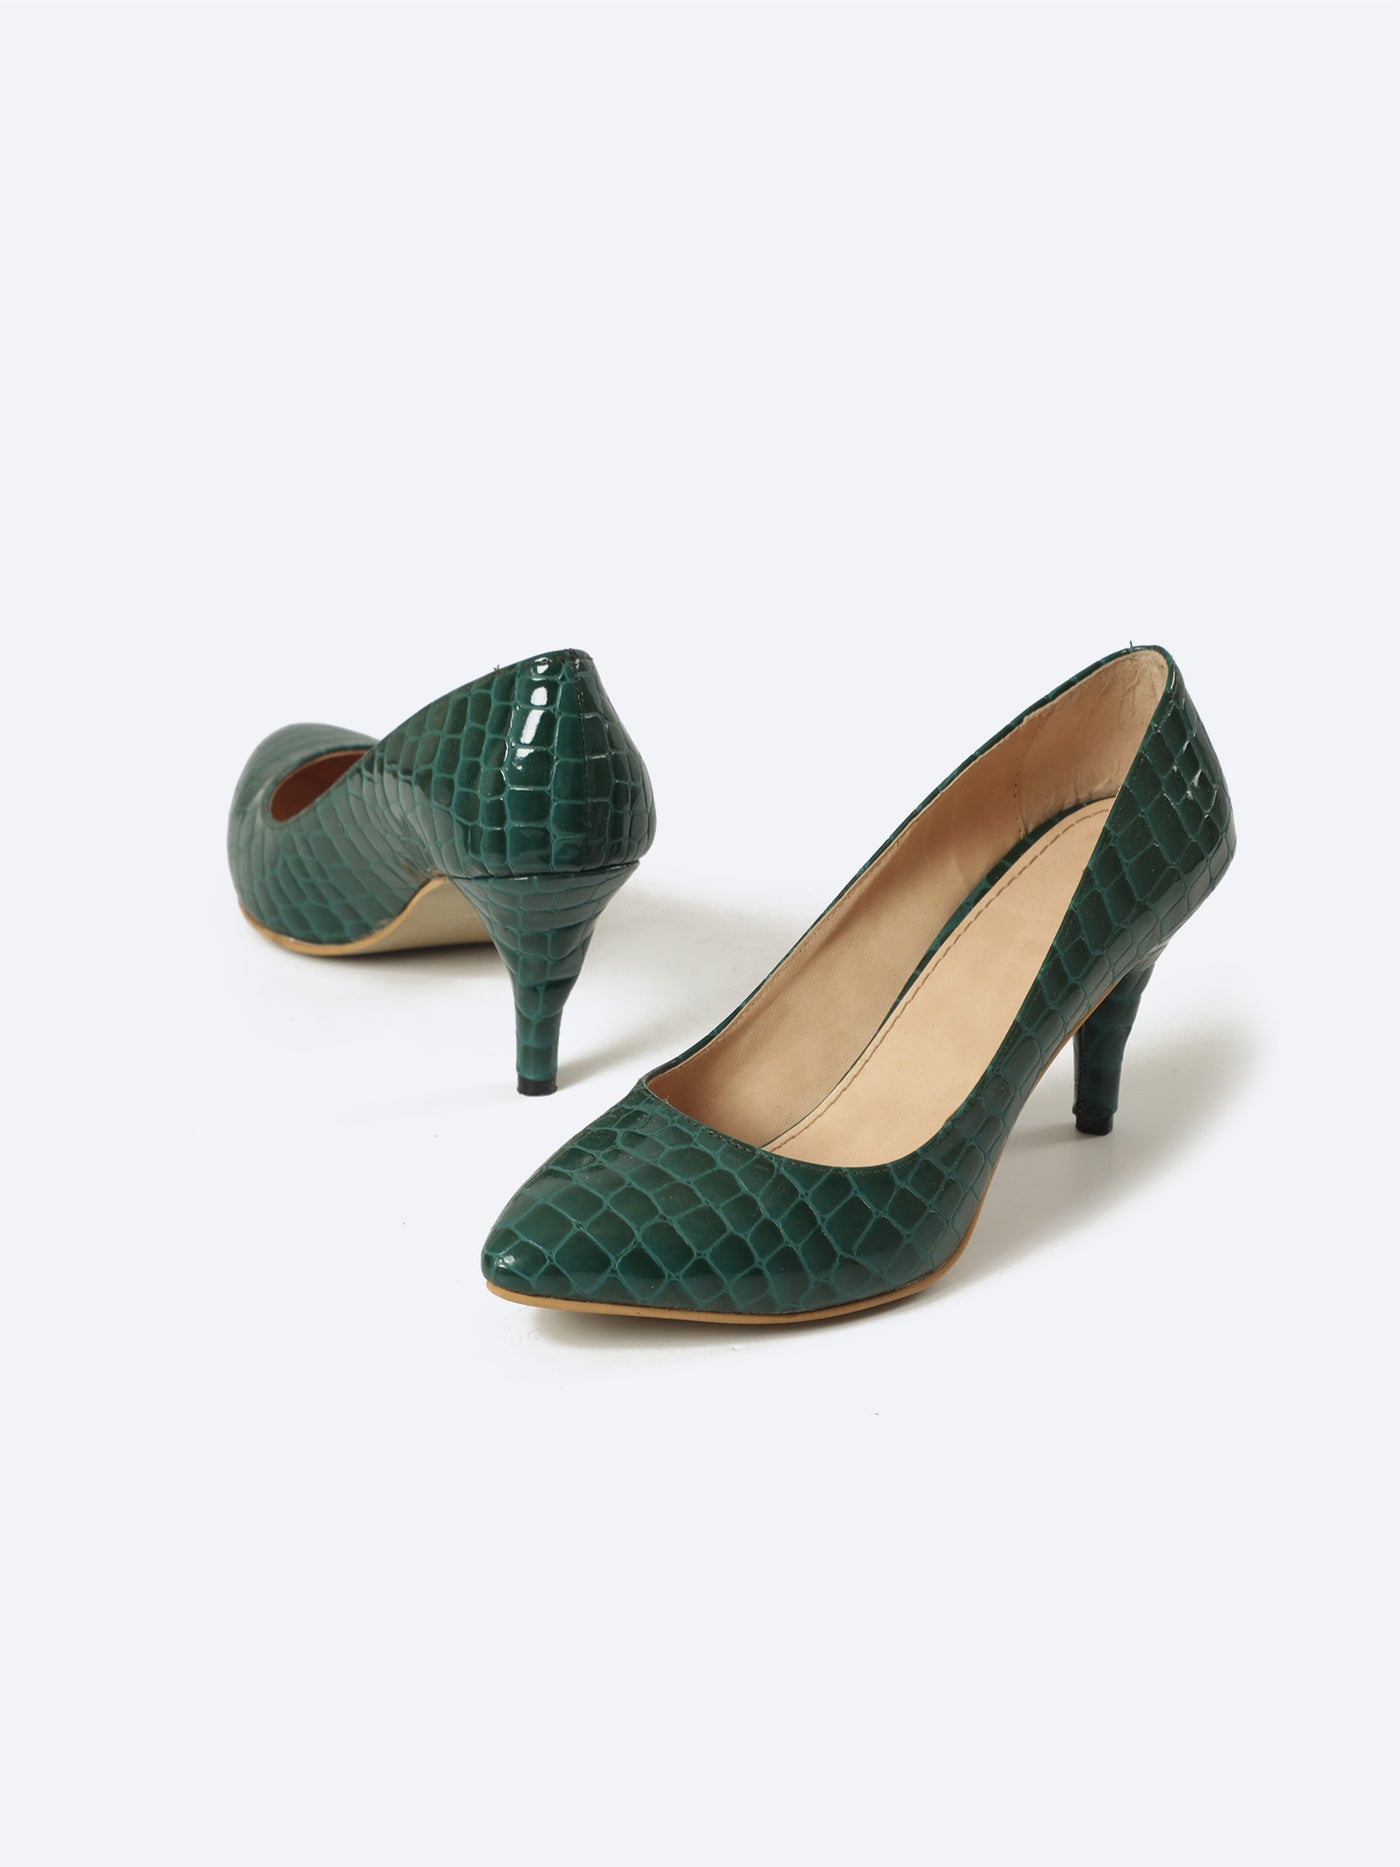 Heels - Crocodile Pattern - Shiny